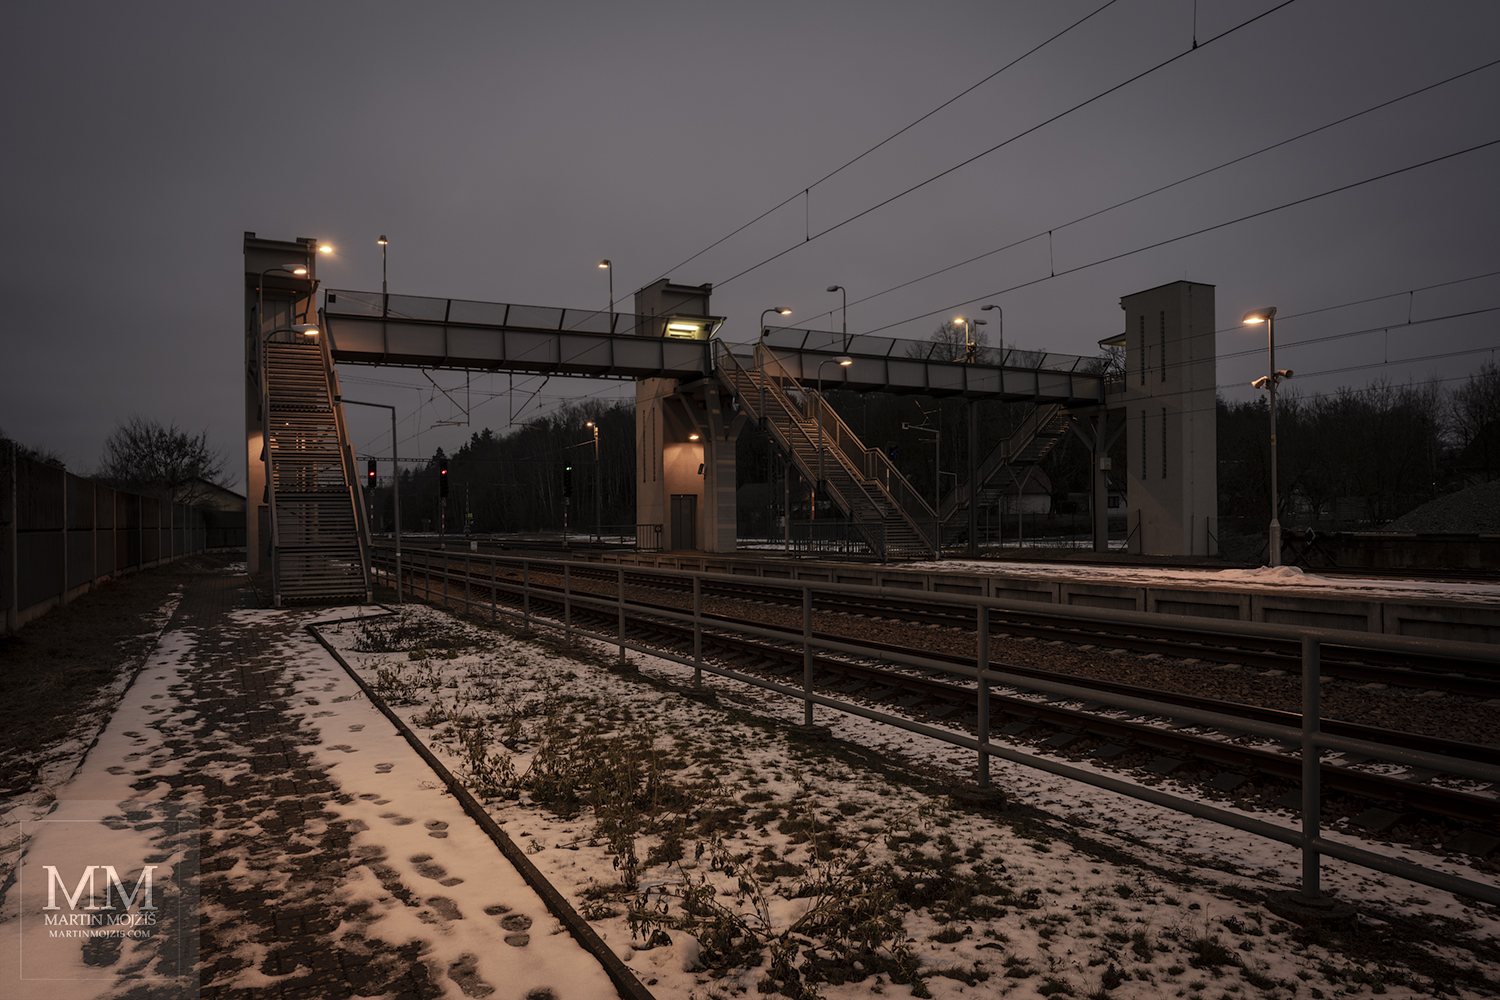 Crossing the tracks in dusk.